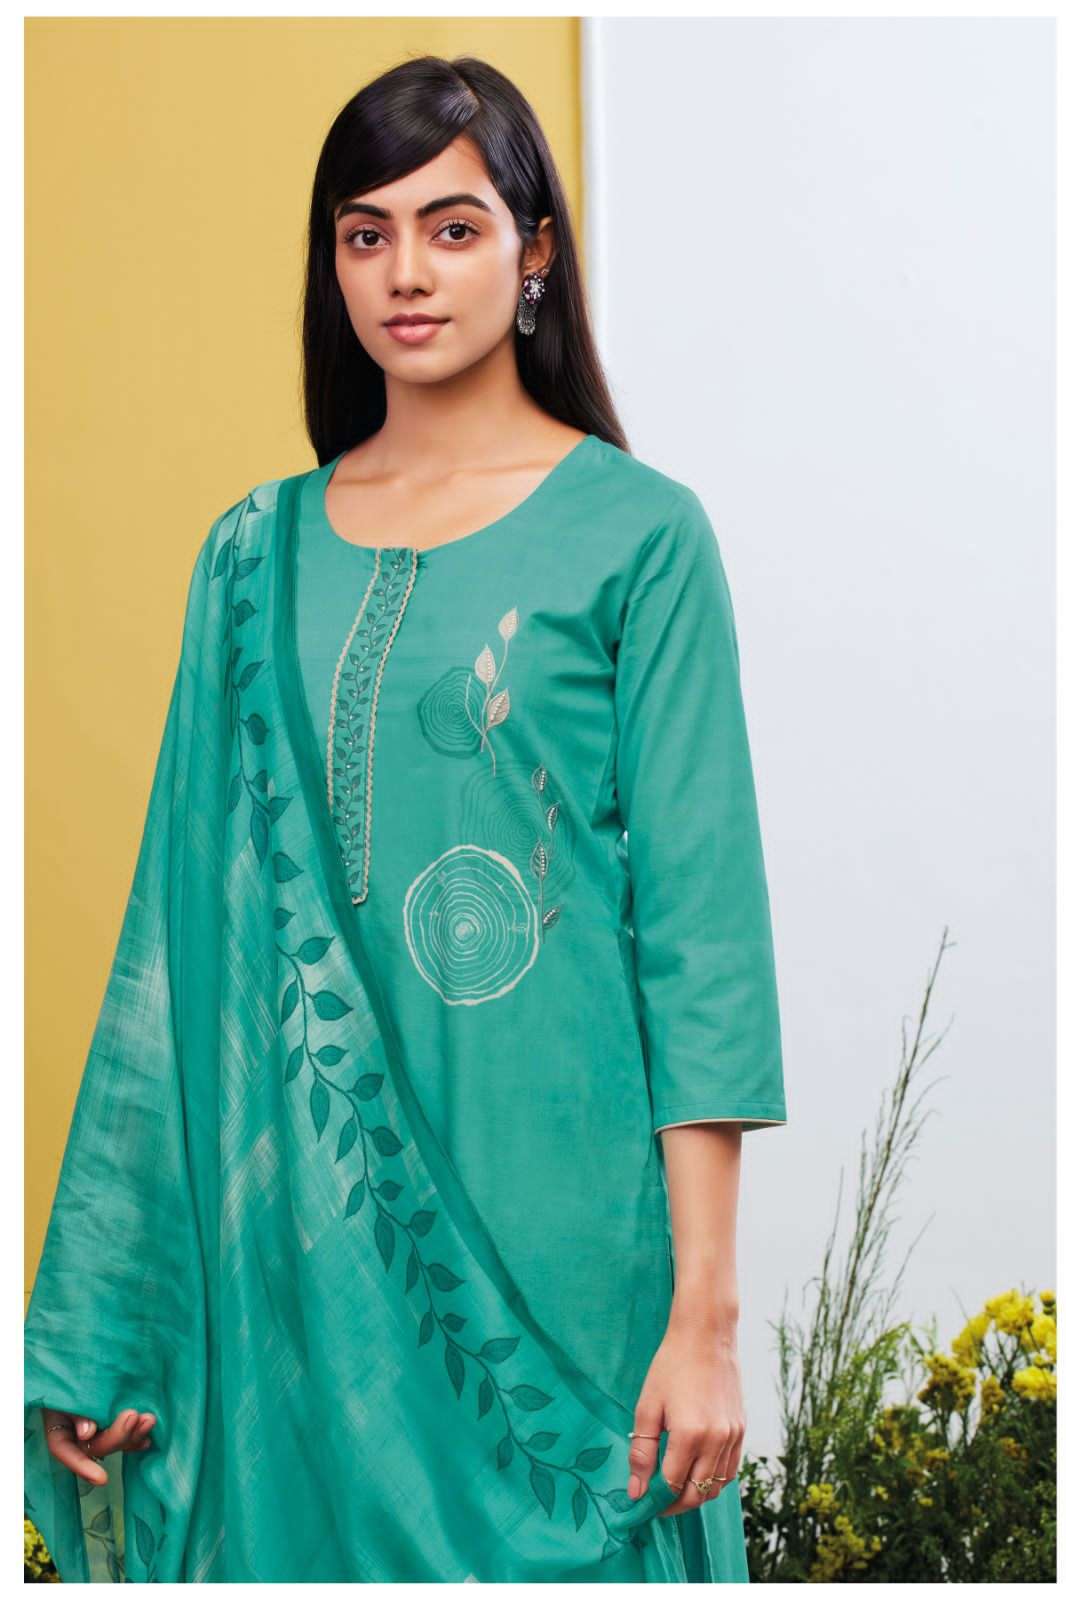 ganga avni 1654 series premium cotton designer salwar kameez catalogue online dealer surat 